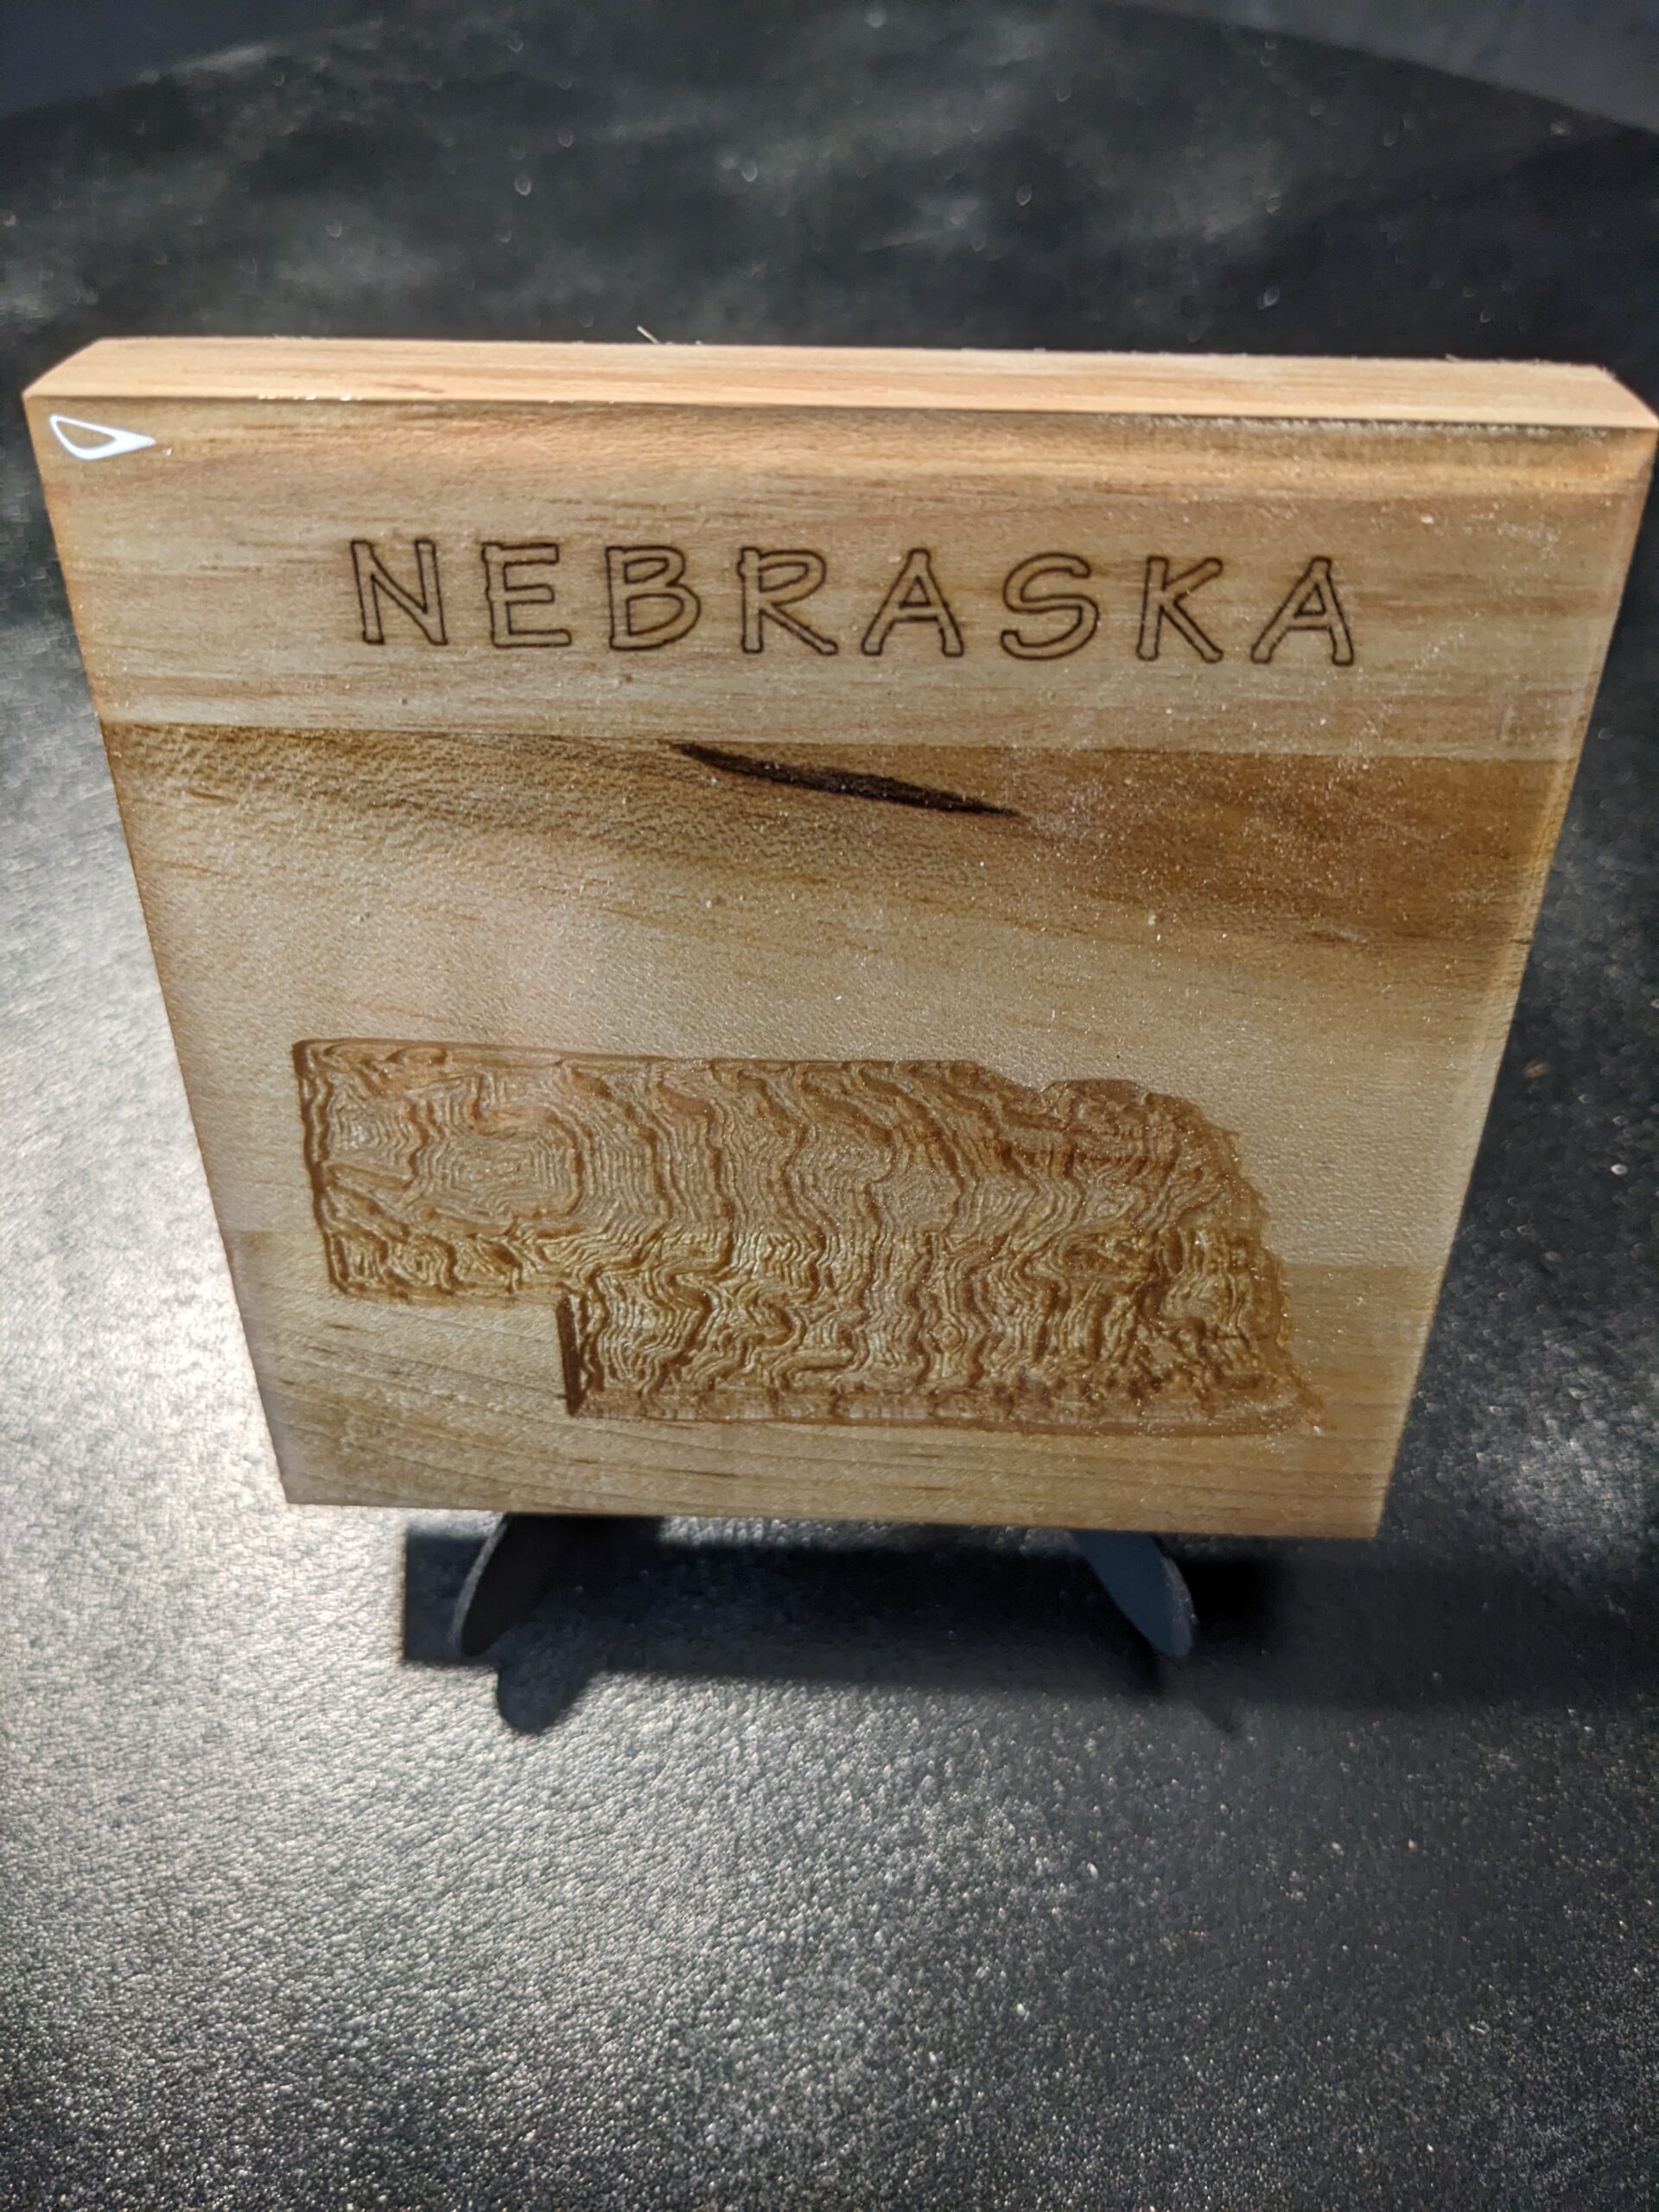 Nebraska - Topographical Drink Coaster